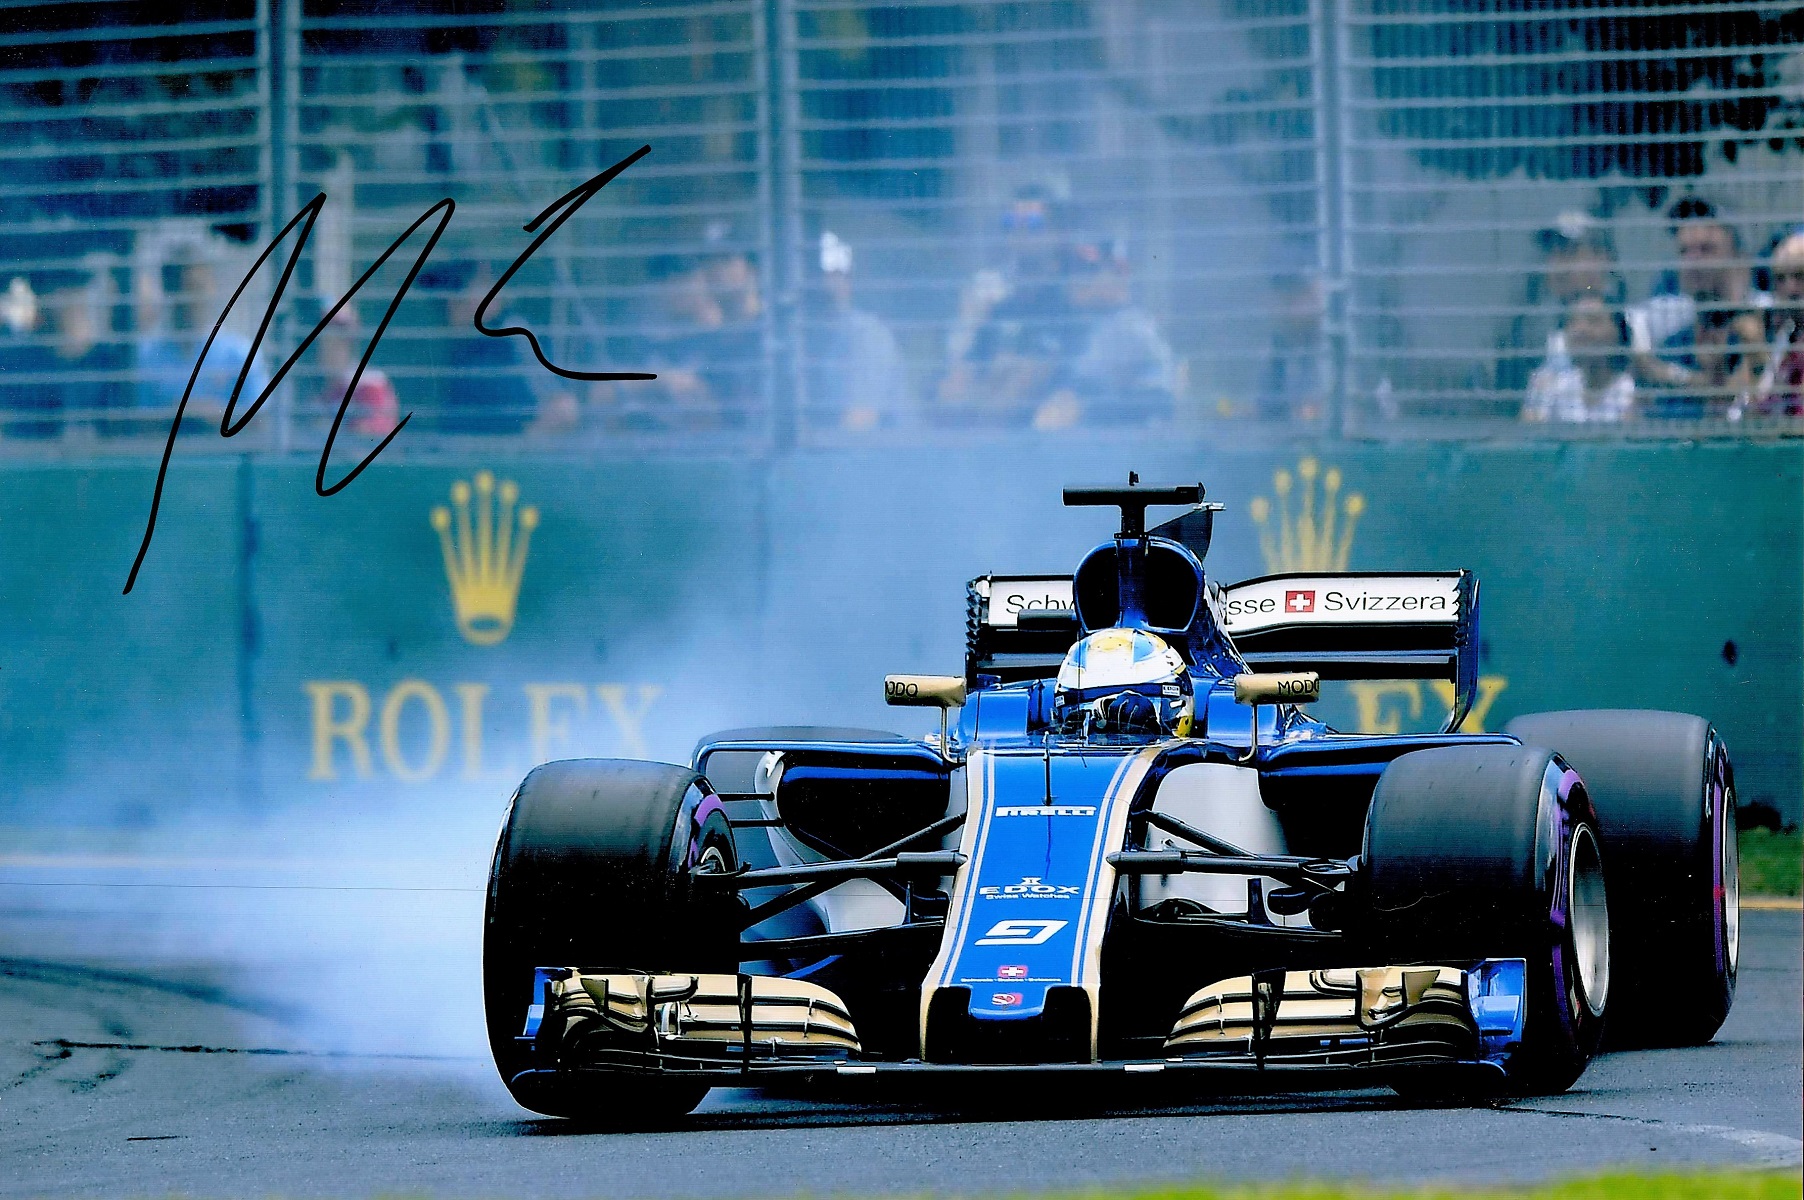 Motor Racing Marcus Ericsson signed Sauber Formula One 12x8 colour photo. Marcus Thorbjorn